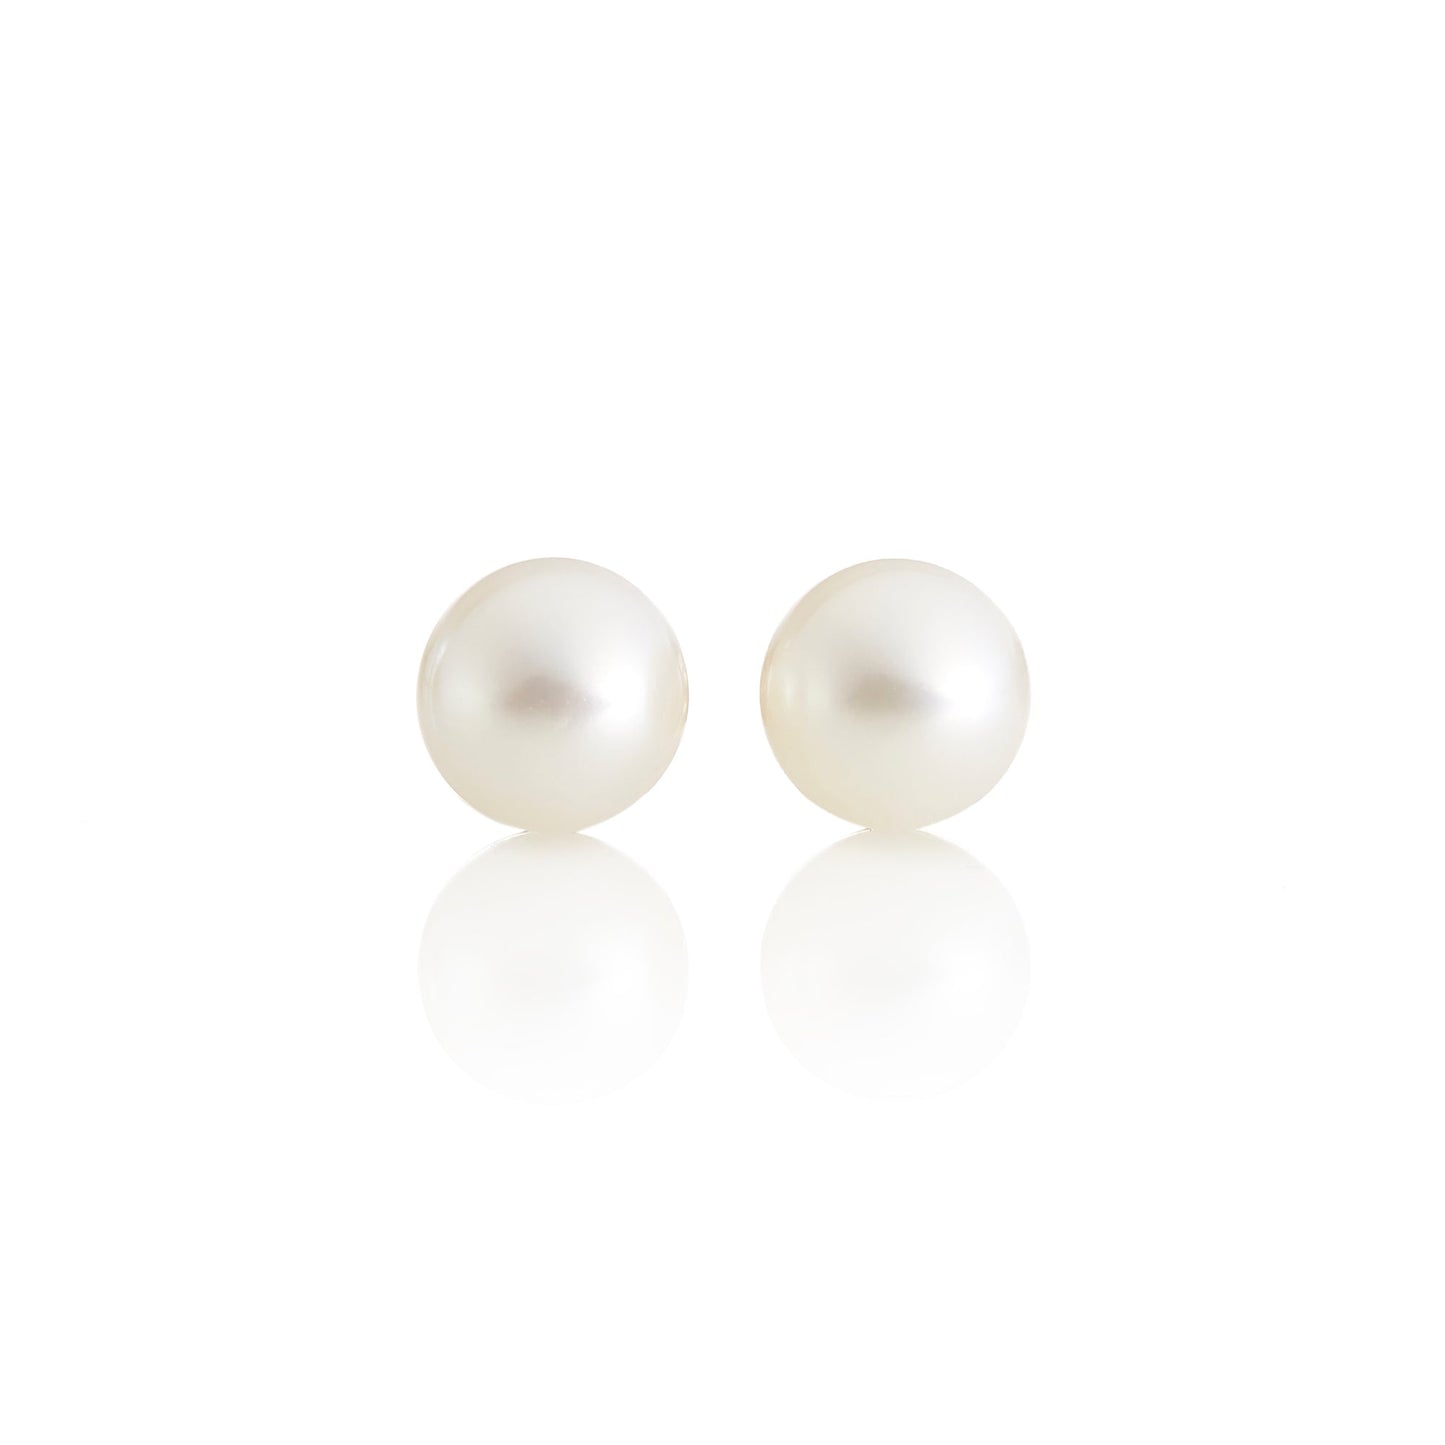 5mm White Pearl Earrings